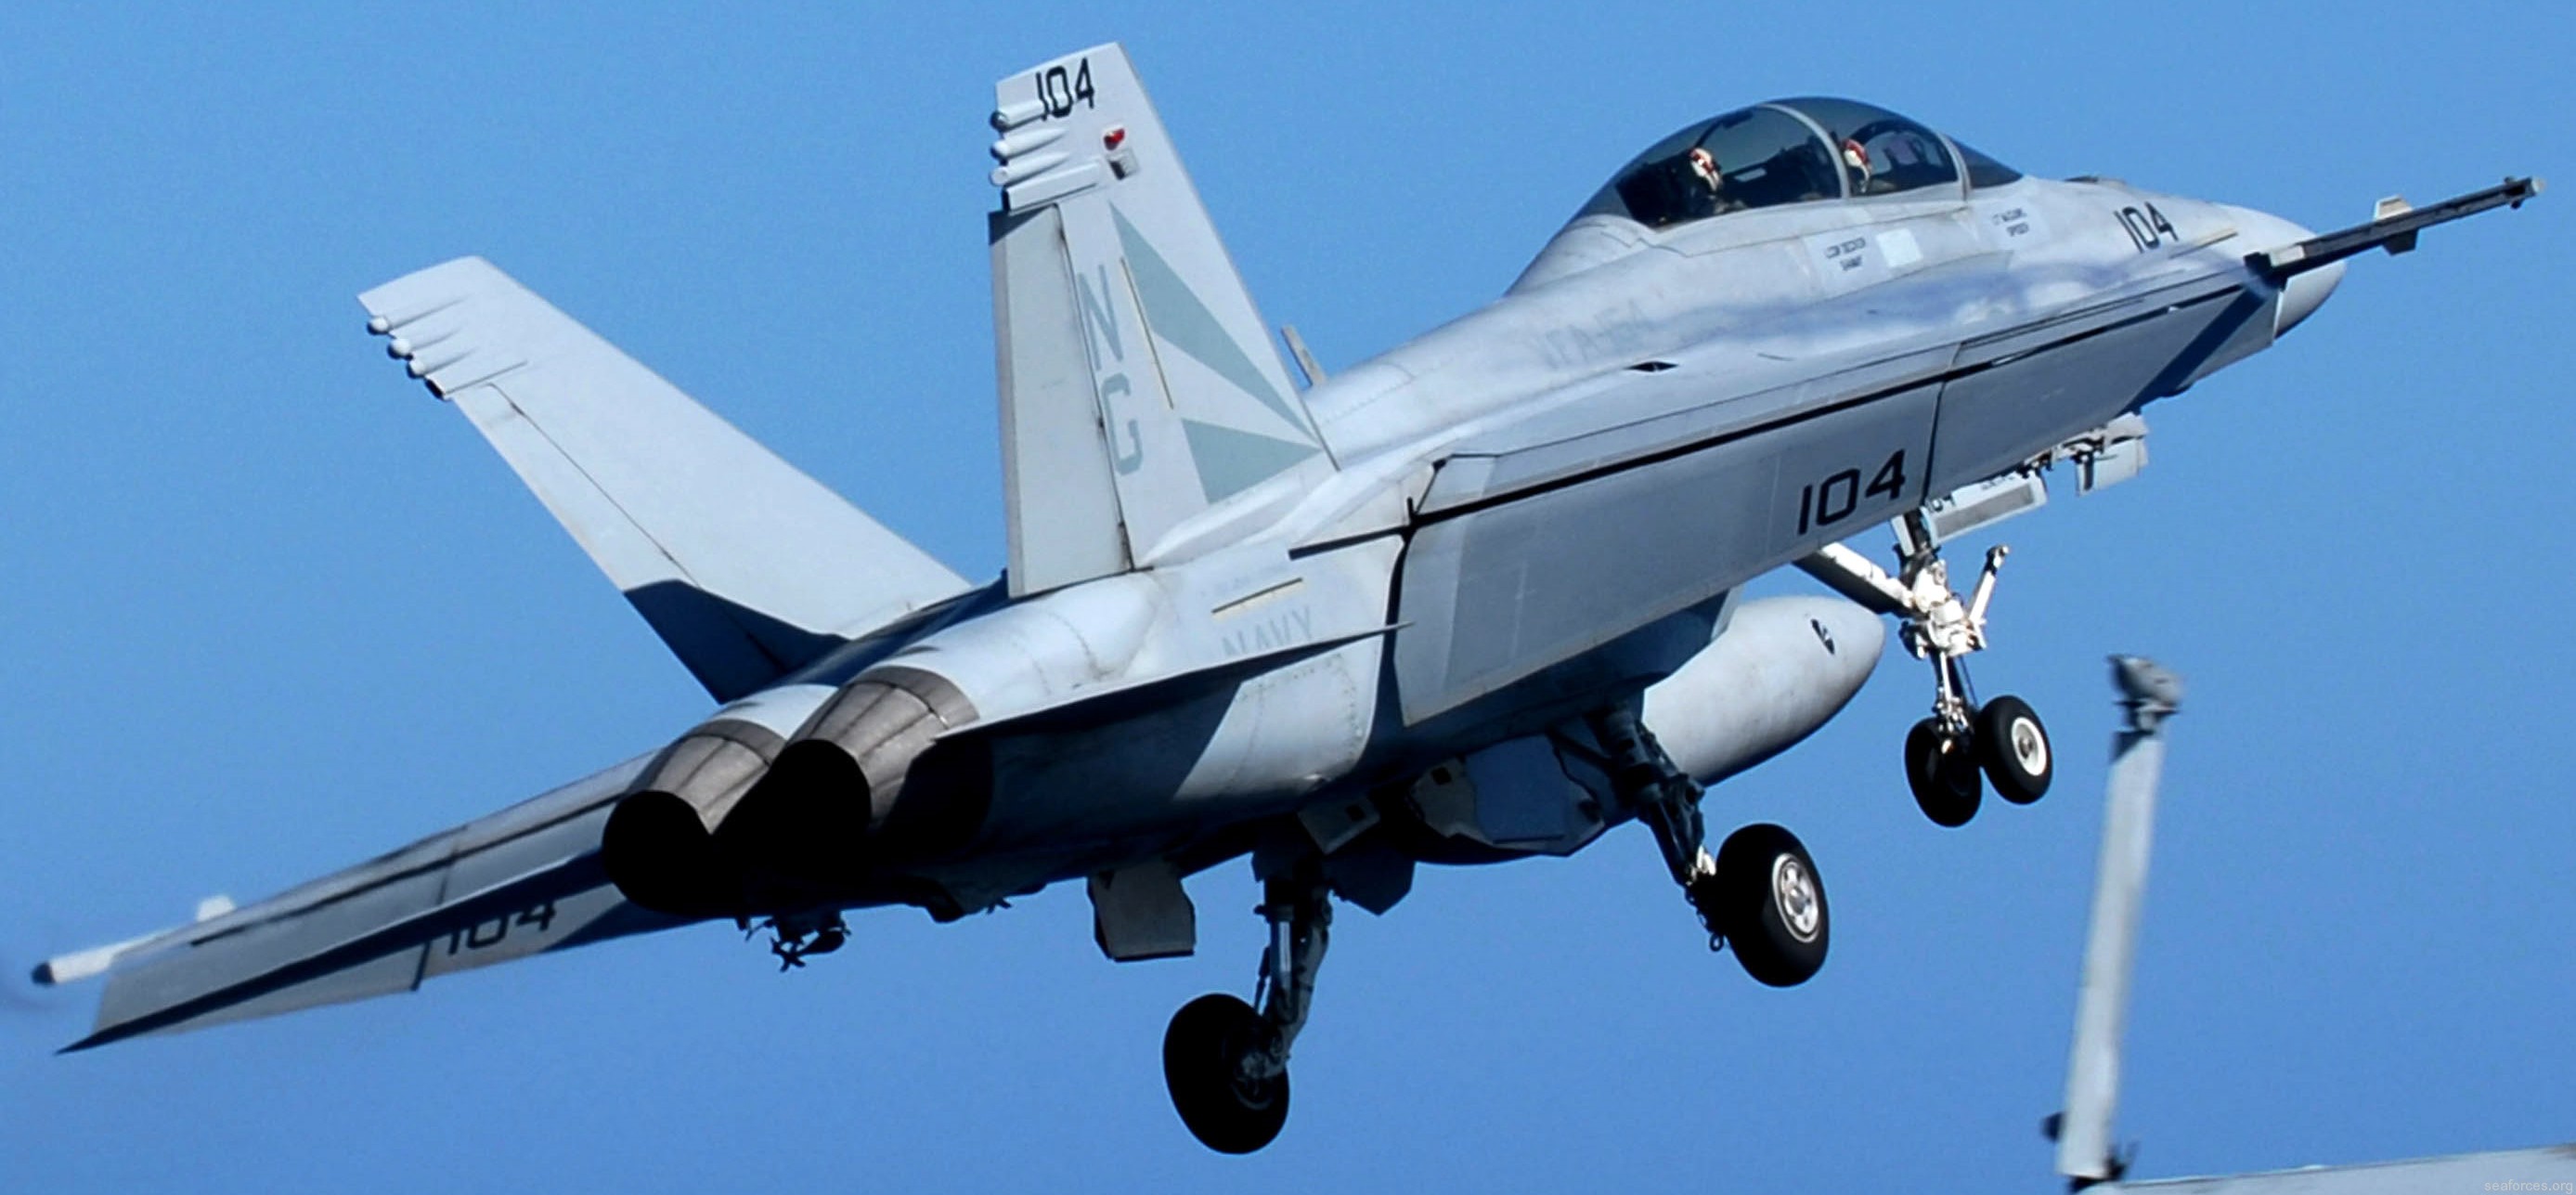 vfa-154 black knights strike fighter squadron navy f/a-18f super hornet carrier air wing cvw-9 uss john c. stennis cvn-70 124